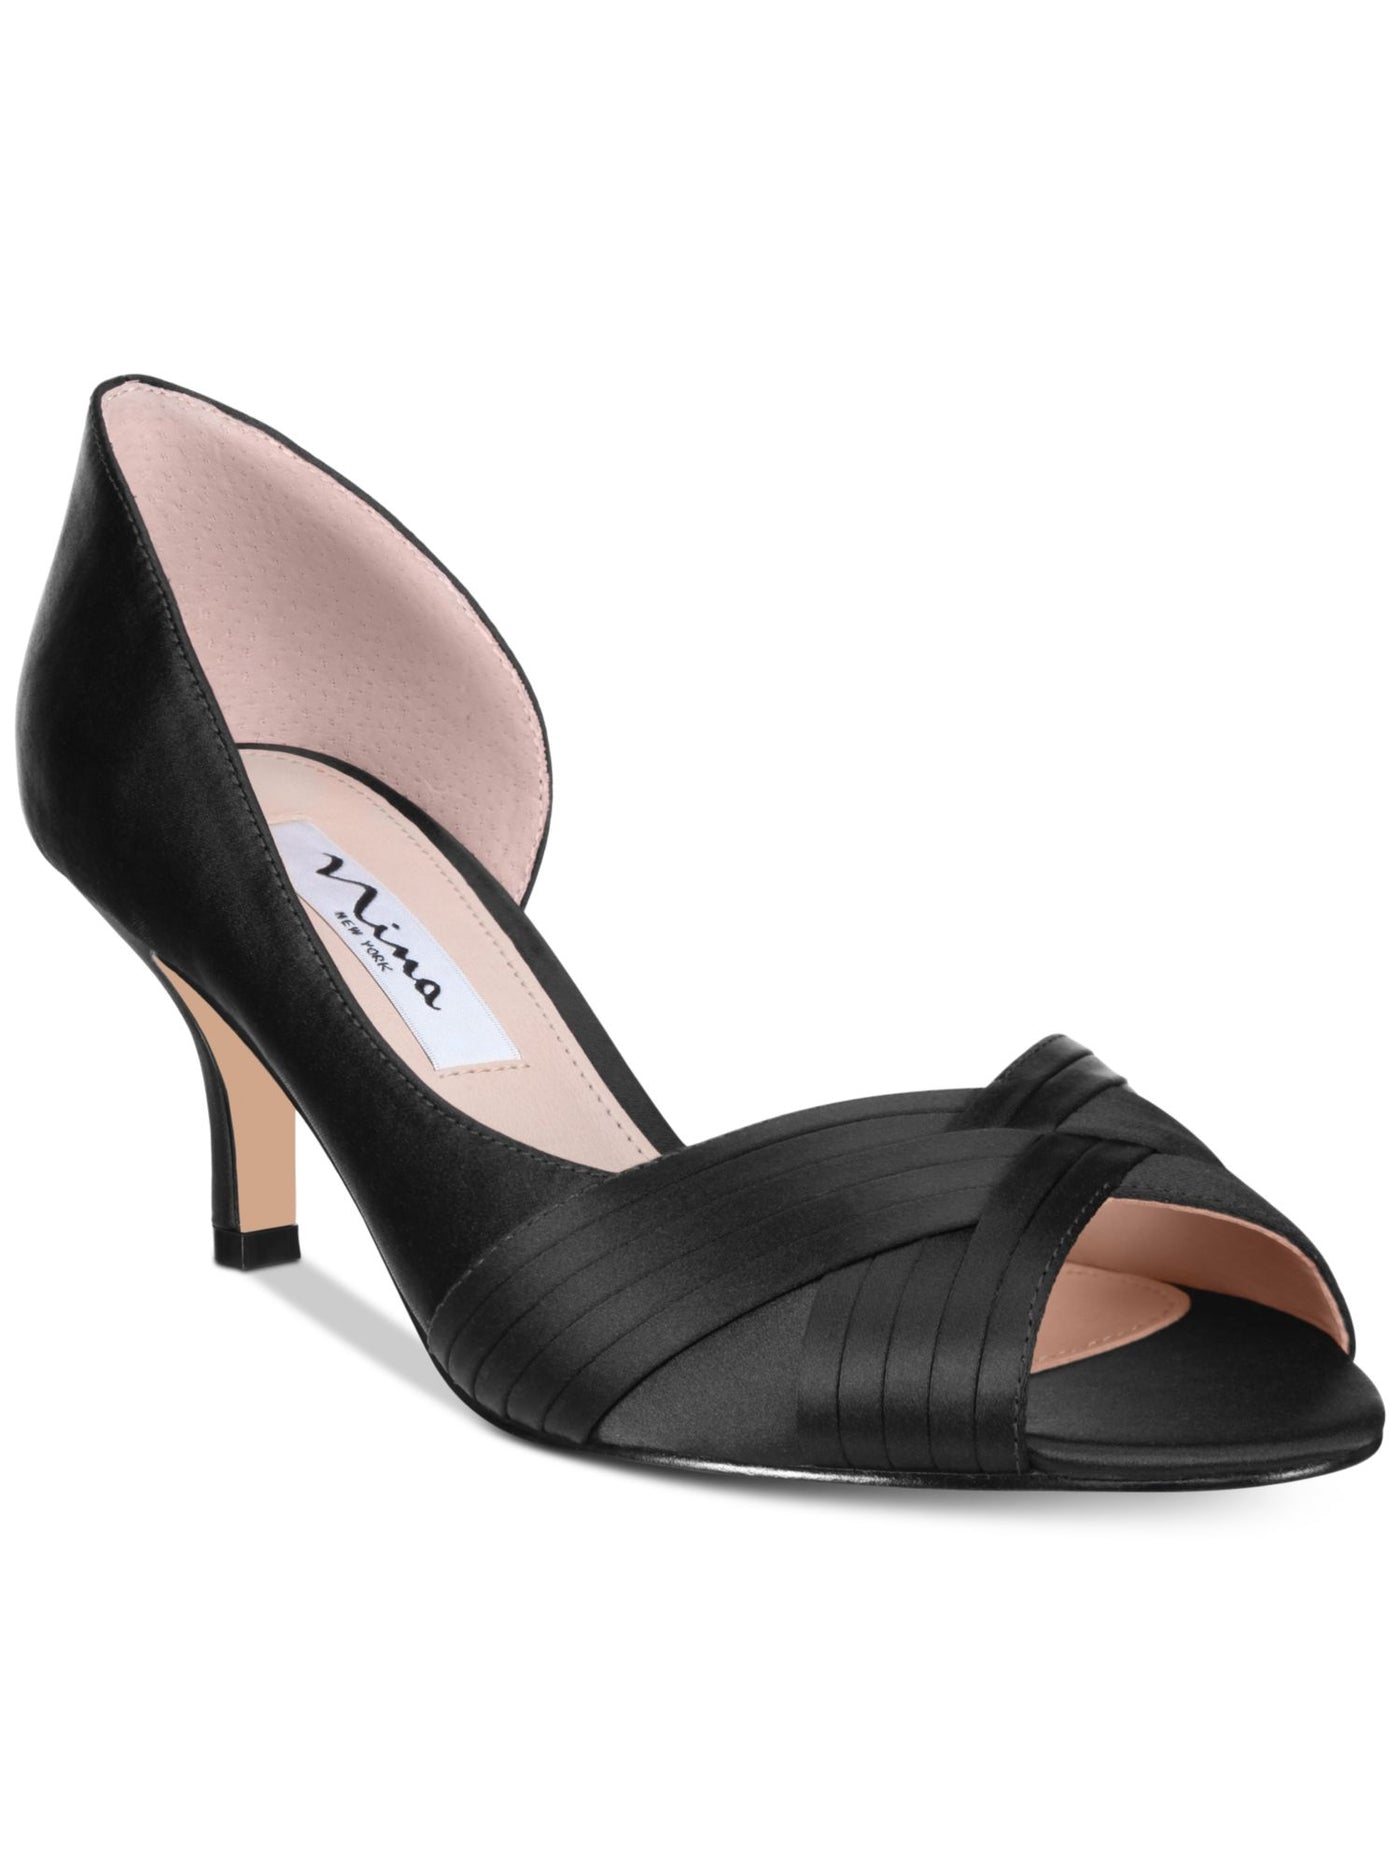 NINA NEW YORK Womens Black Crisscross Detailing D Orsay Padded Comfort Contesa Peep Toe Kitten Heel Slip On Leather Pumps Shoes 7.5 M